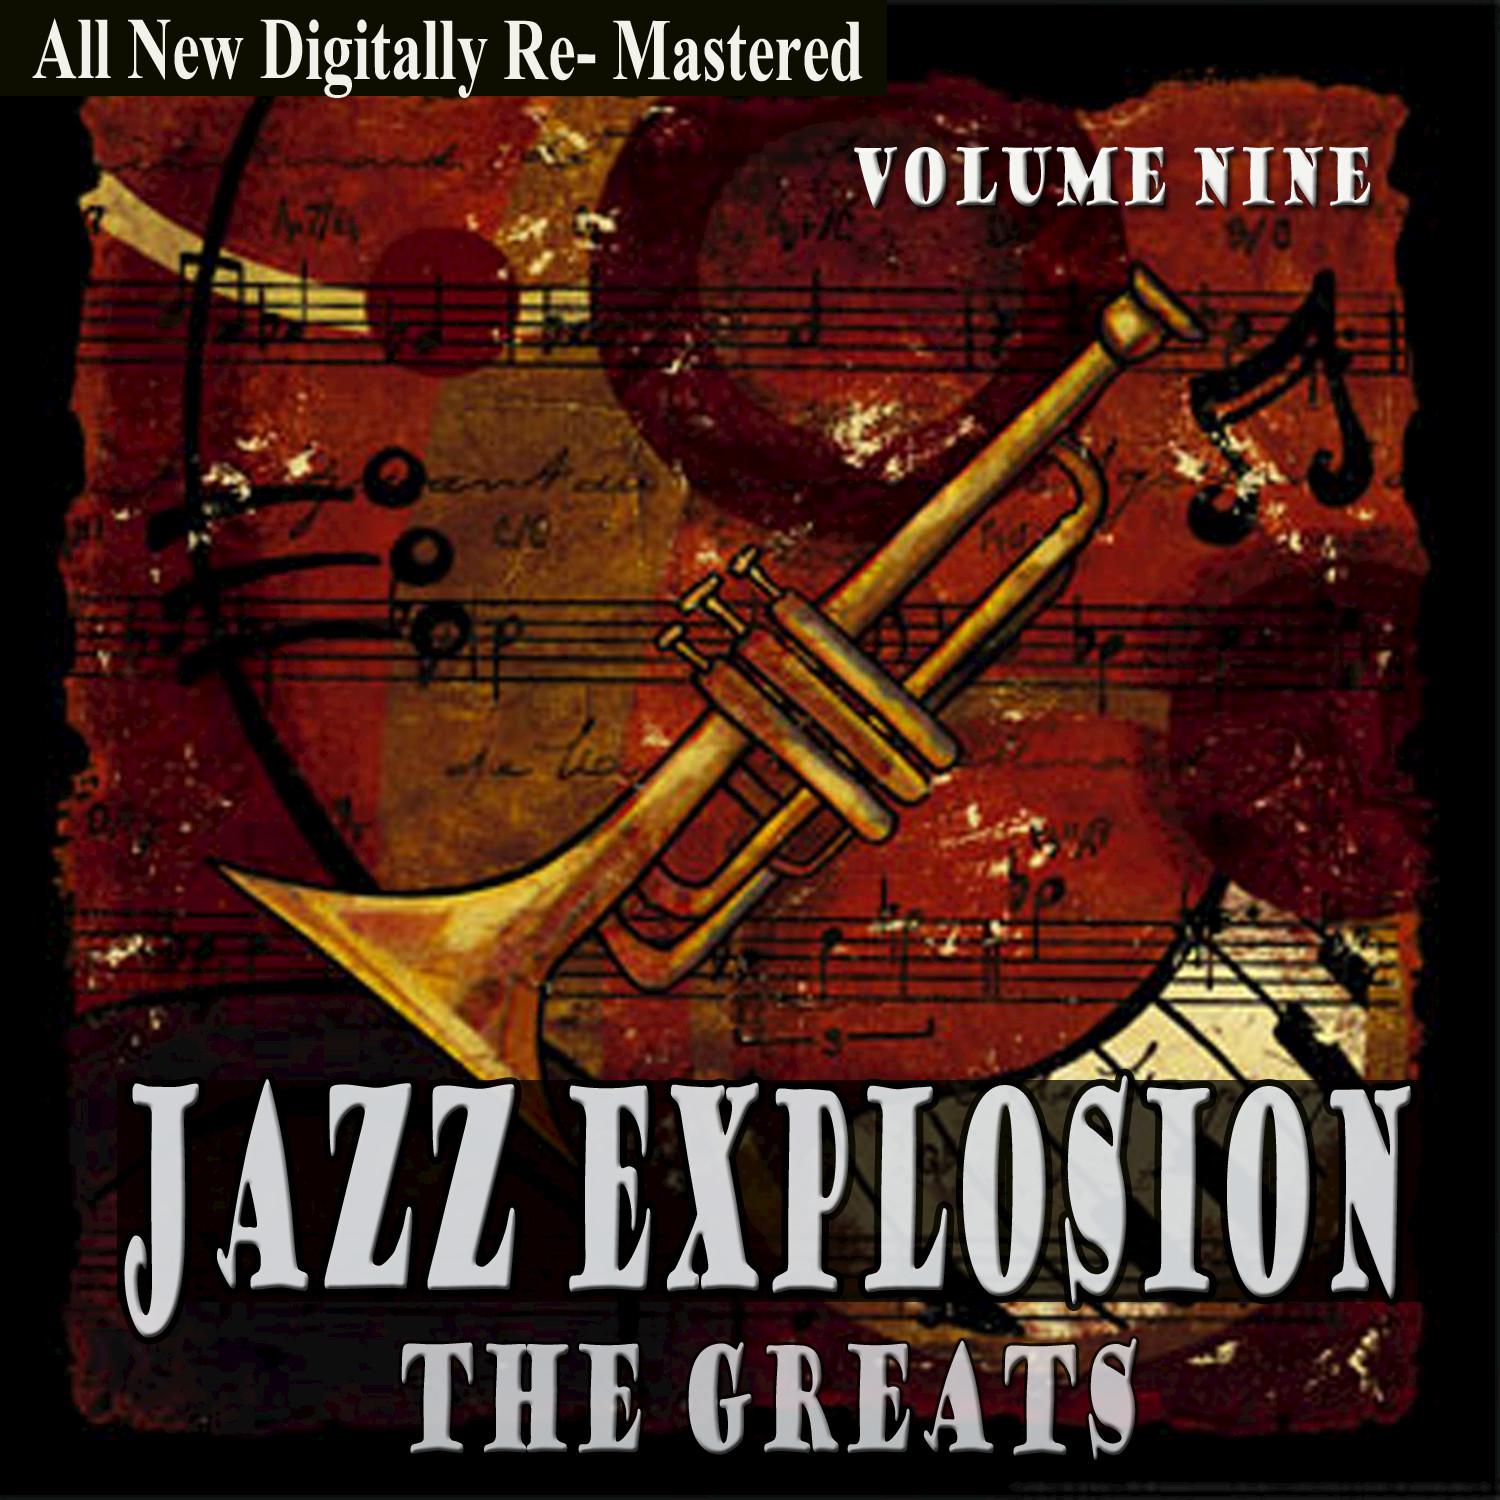 Jazz Explosion - The Greats Volume Nine